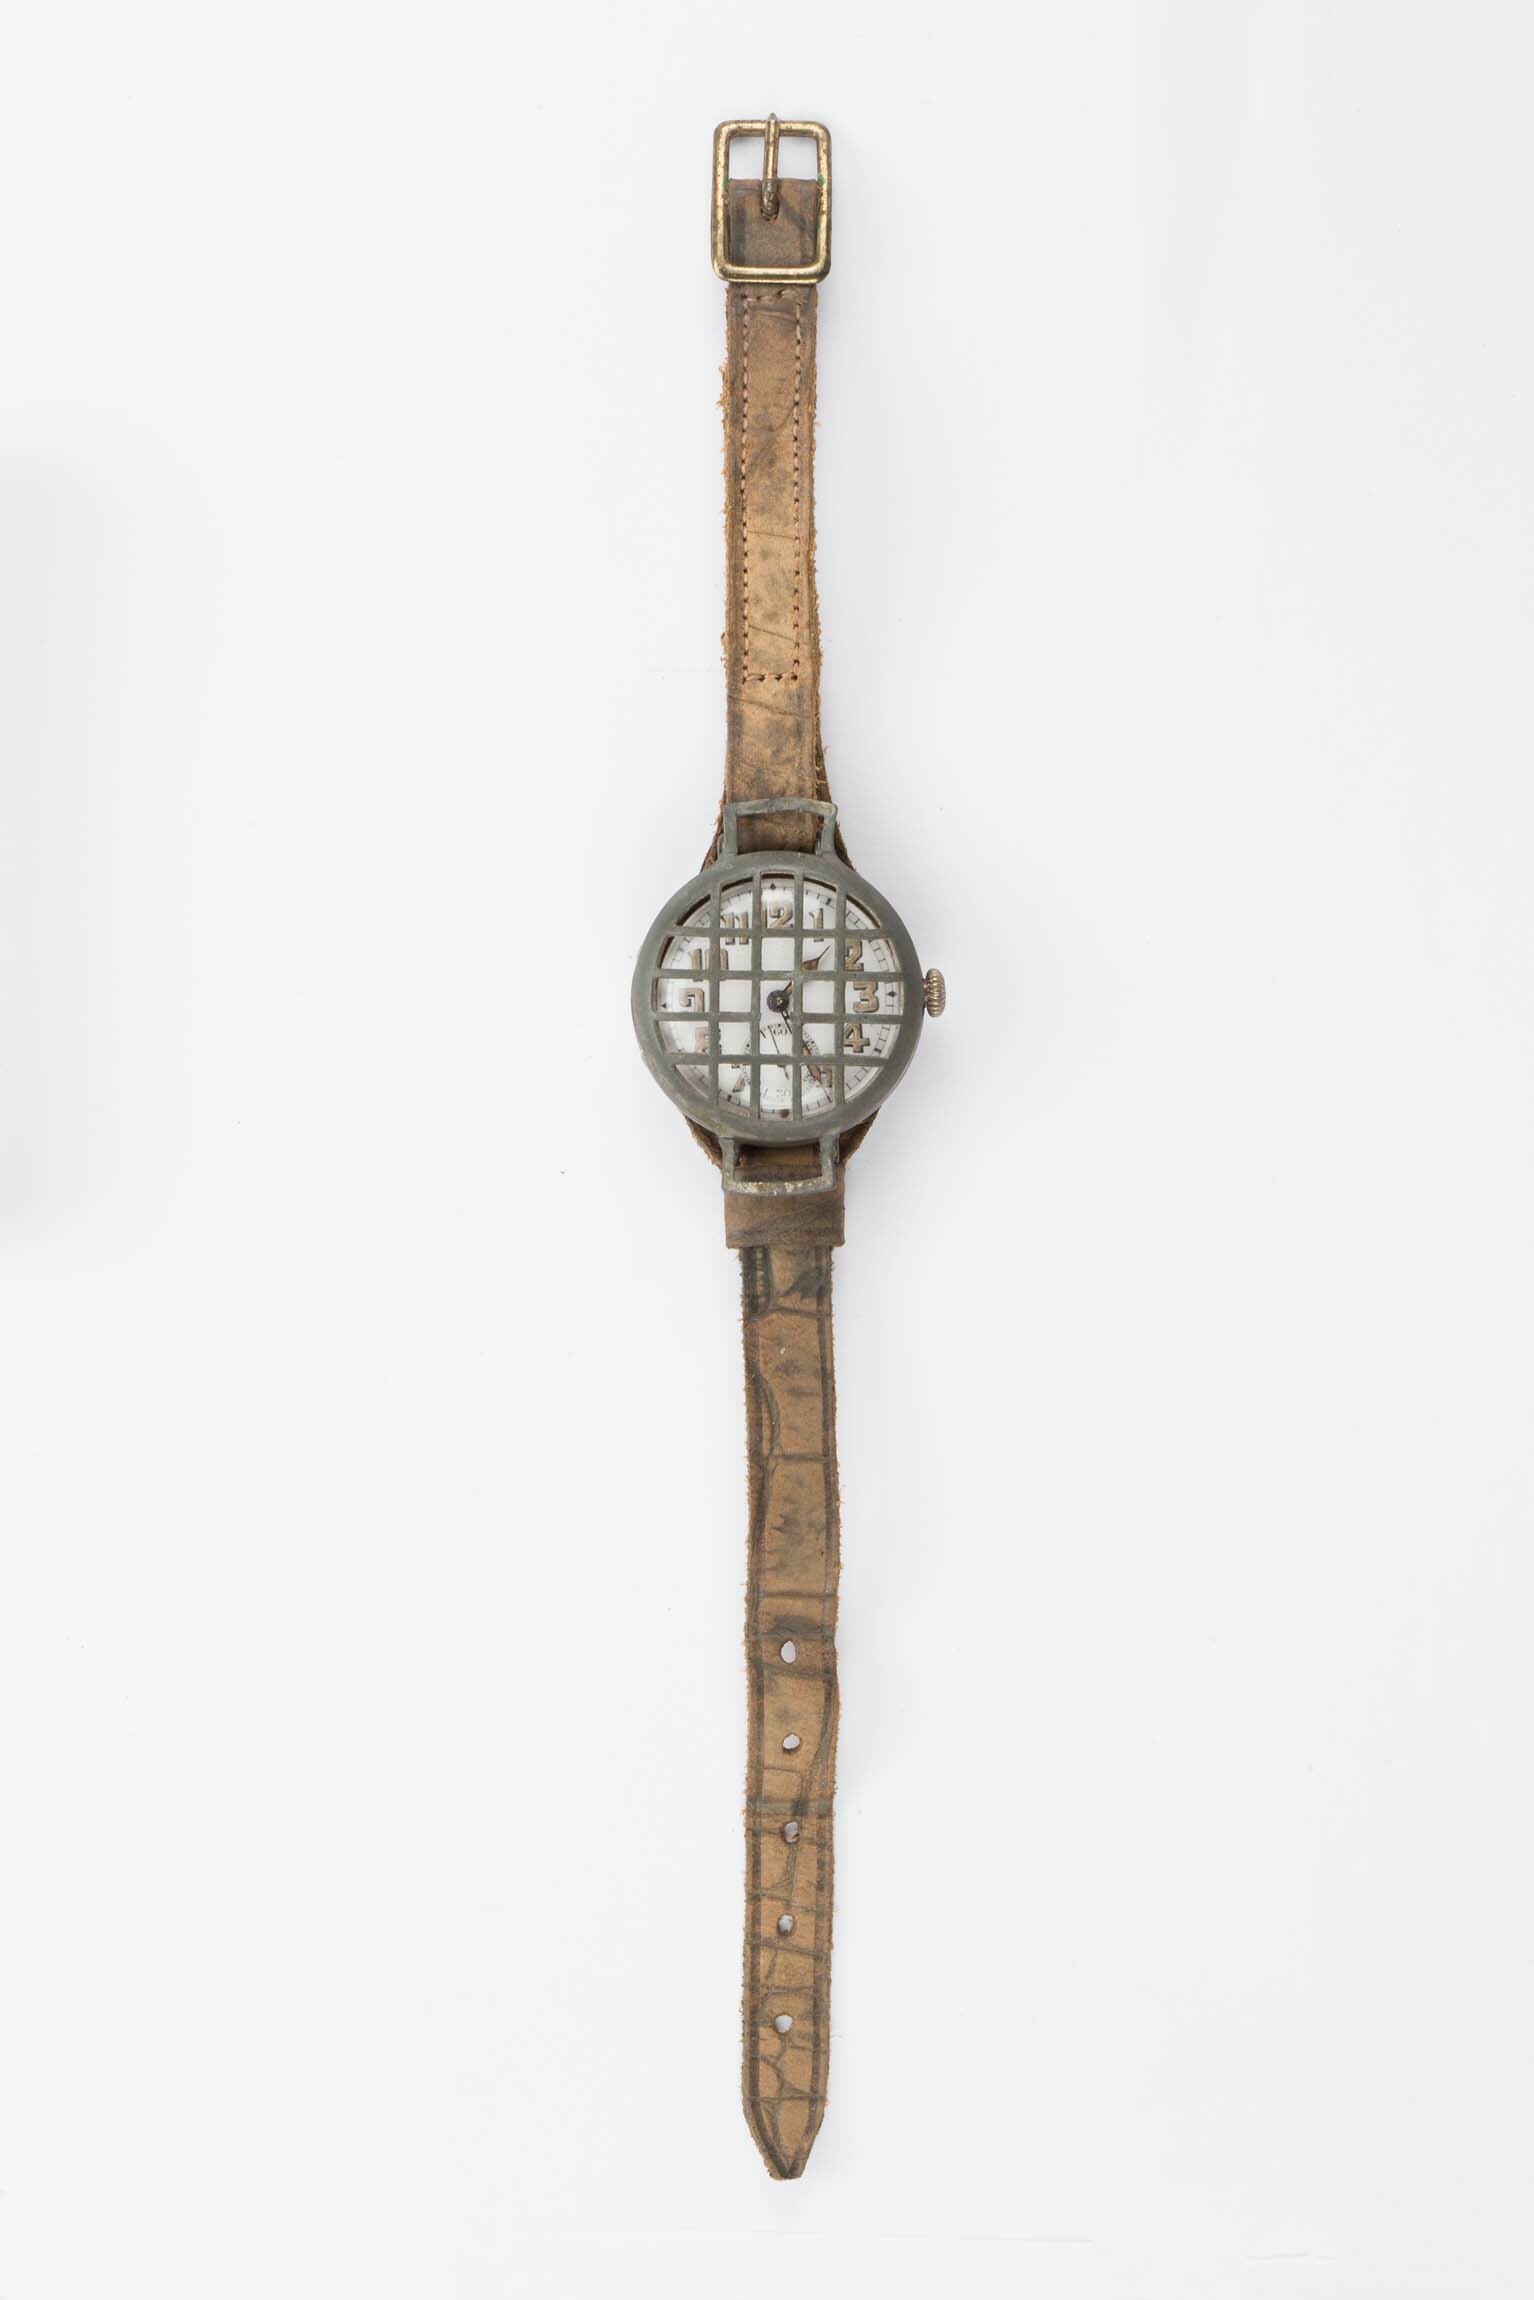 Armbanduhr, Stauffer, Son und Co., La Chaux-de-Fonds, um 1915 (Deutsches Uhrenmuseum CC BY-SA)